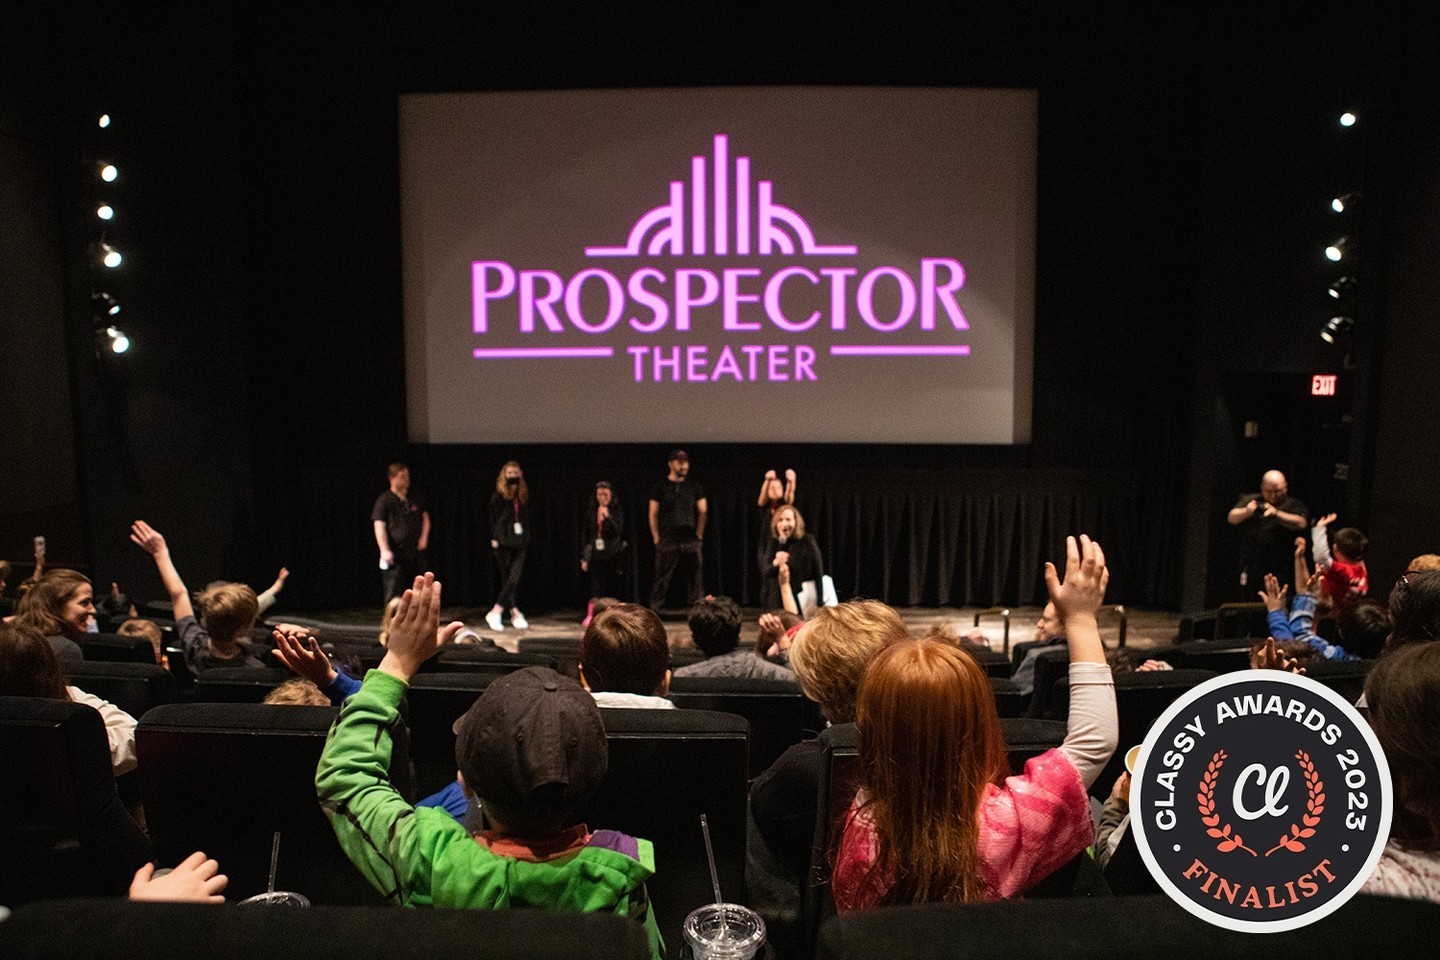 Prospector Theater Ridgefield CT Classy Awards Finalist